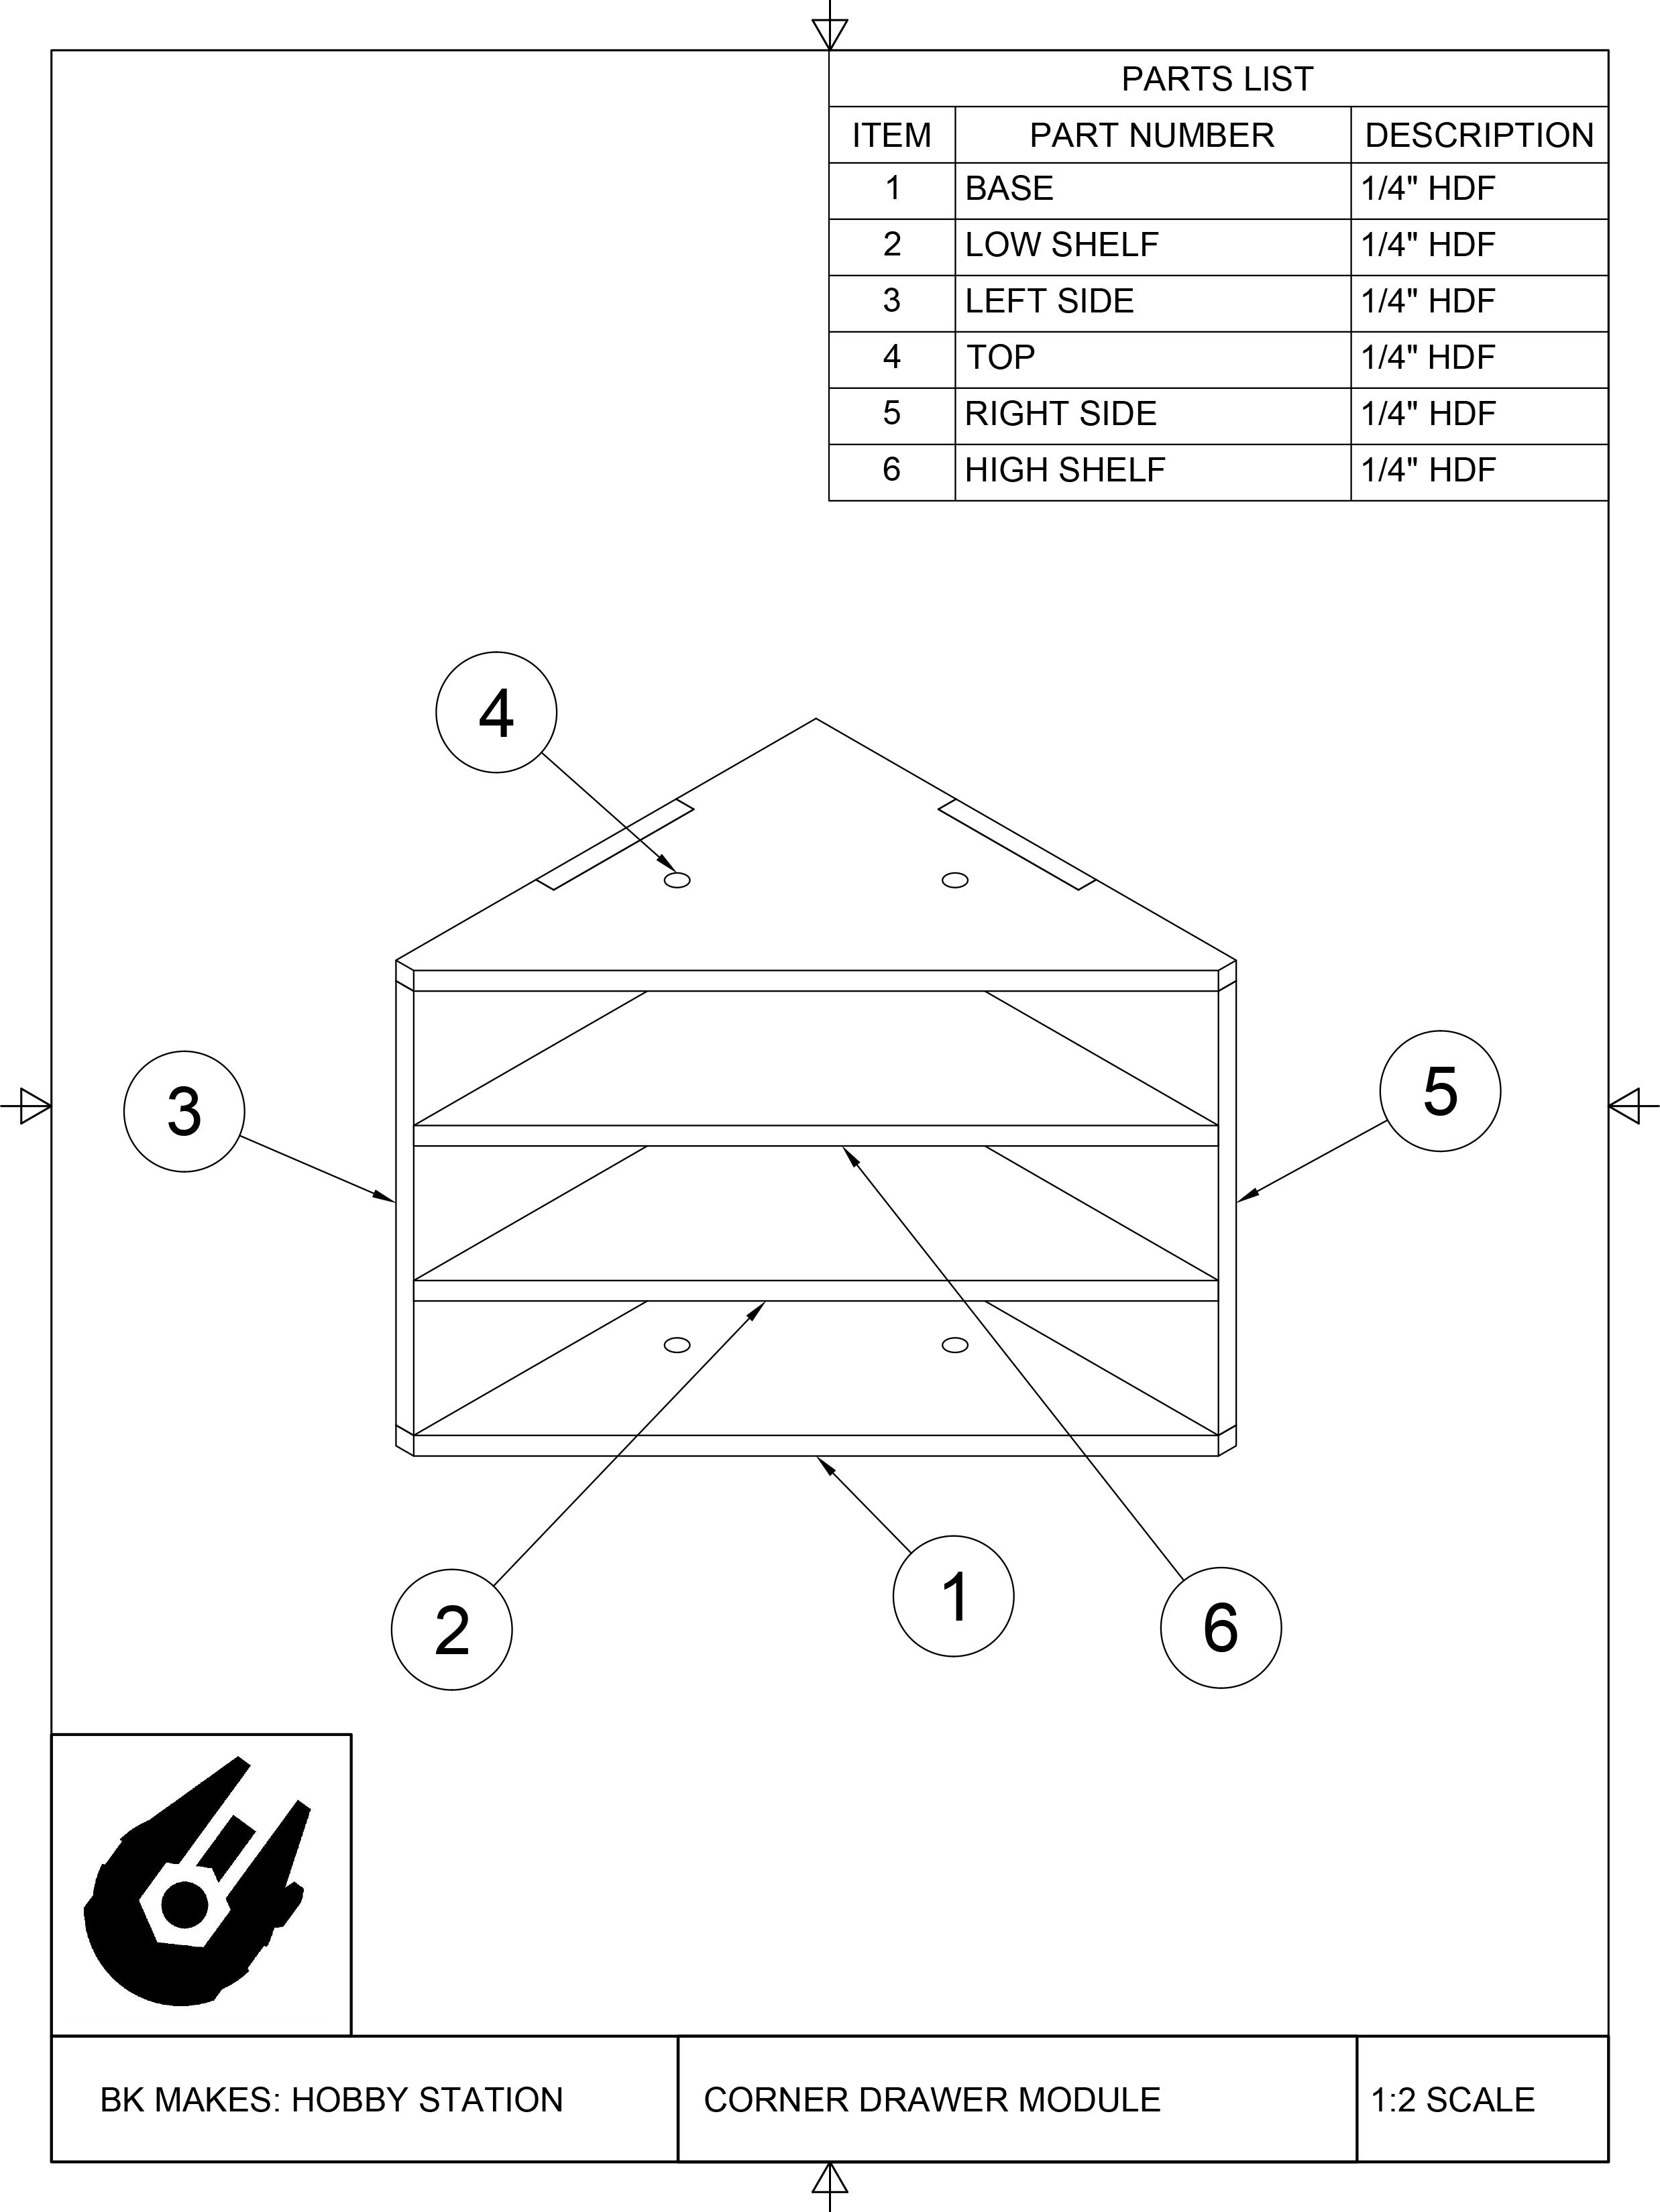 BK MAKES Triangular End Drawer Assembly Module Sheet.jpg